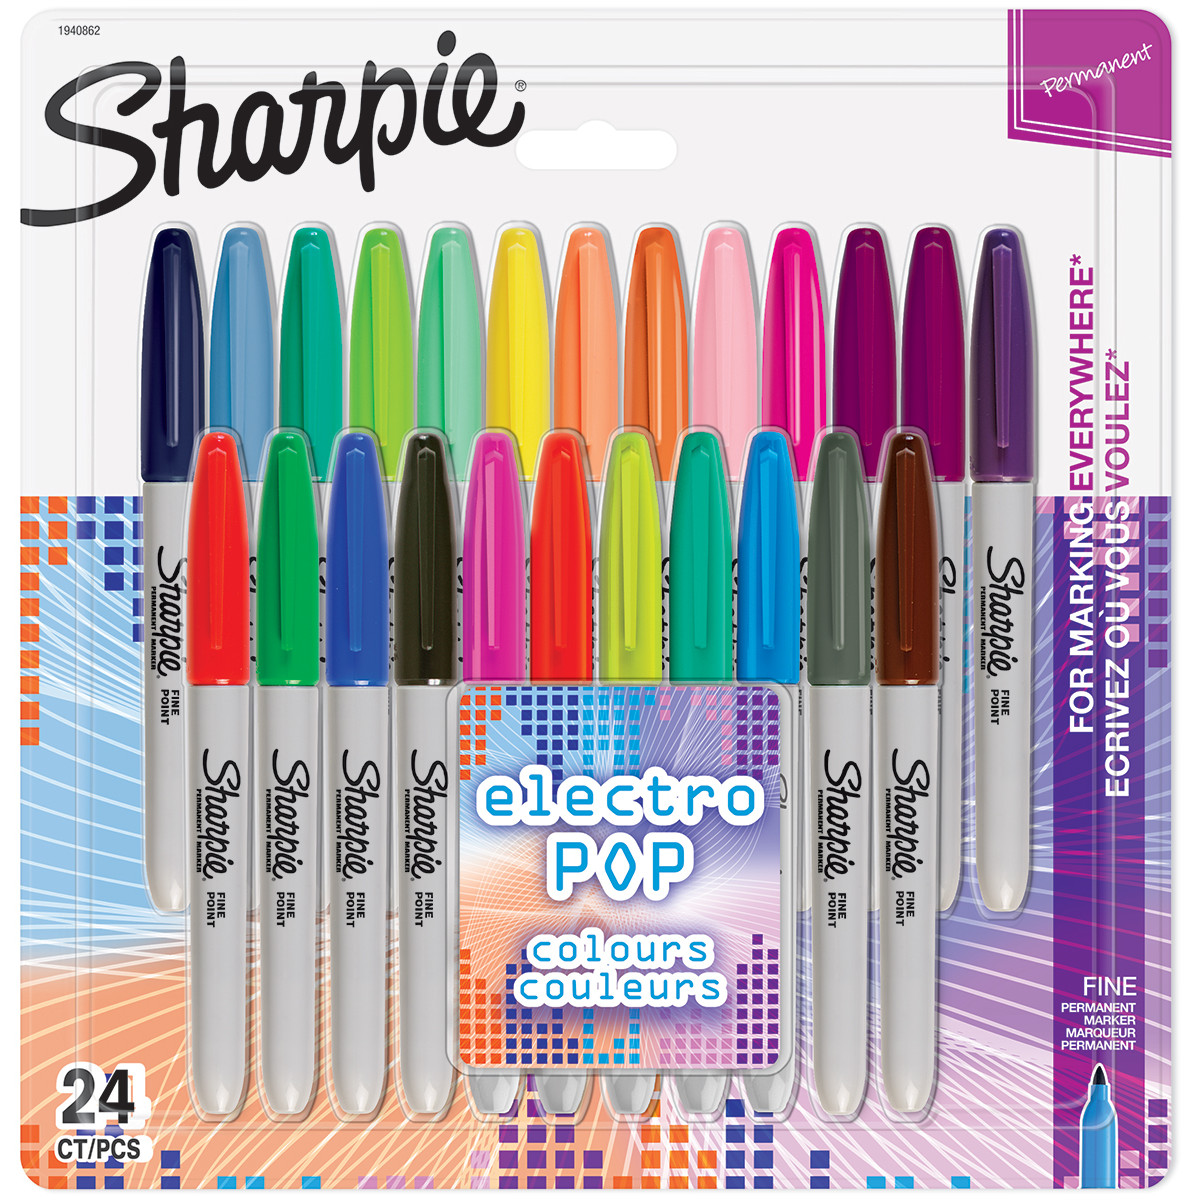 Sharpie Fine Marker Pens - Electric Pop (Pack of 24)